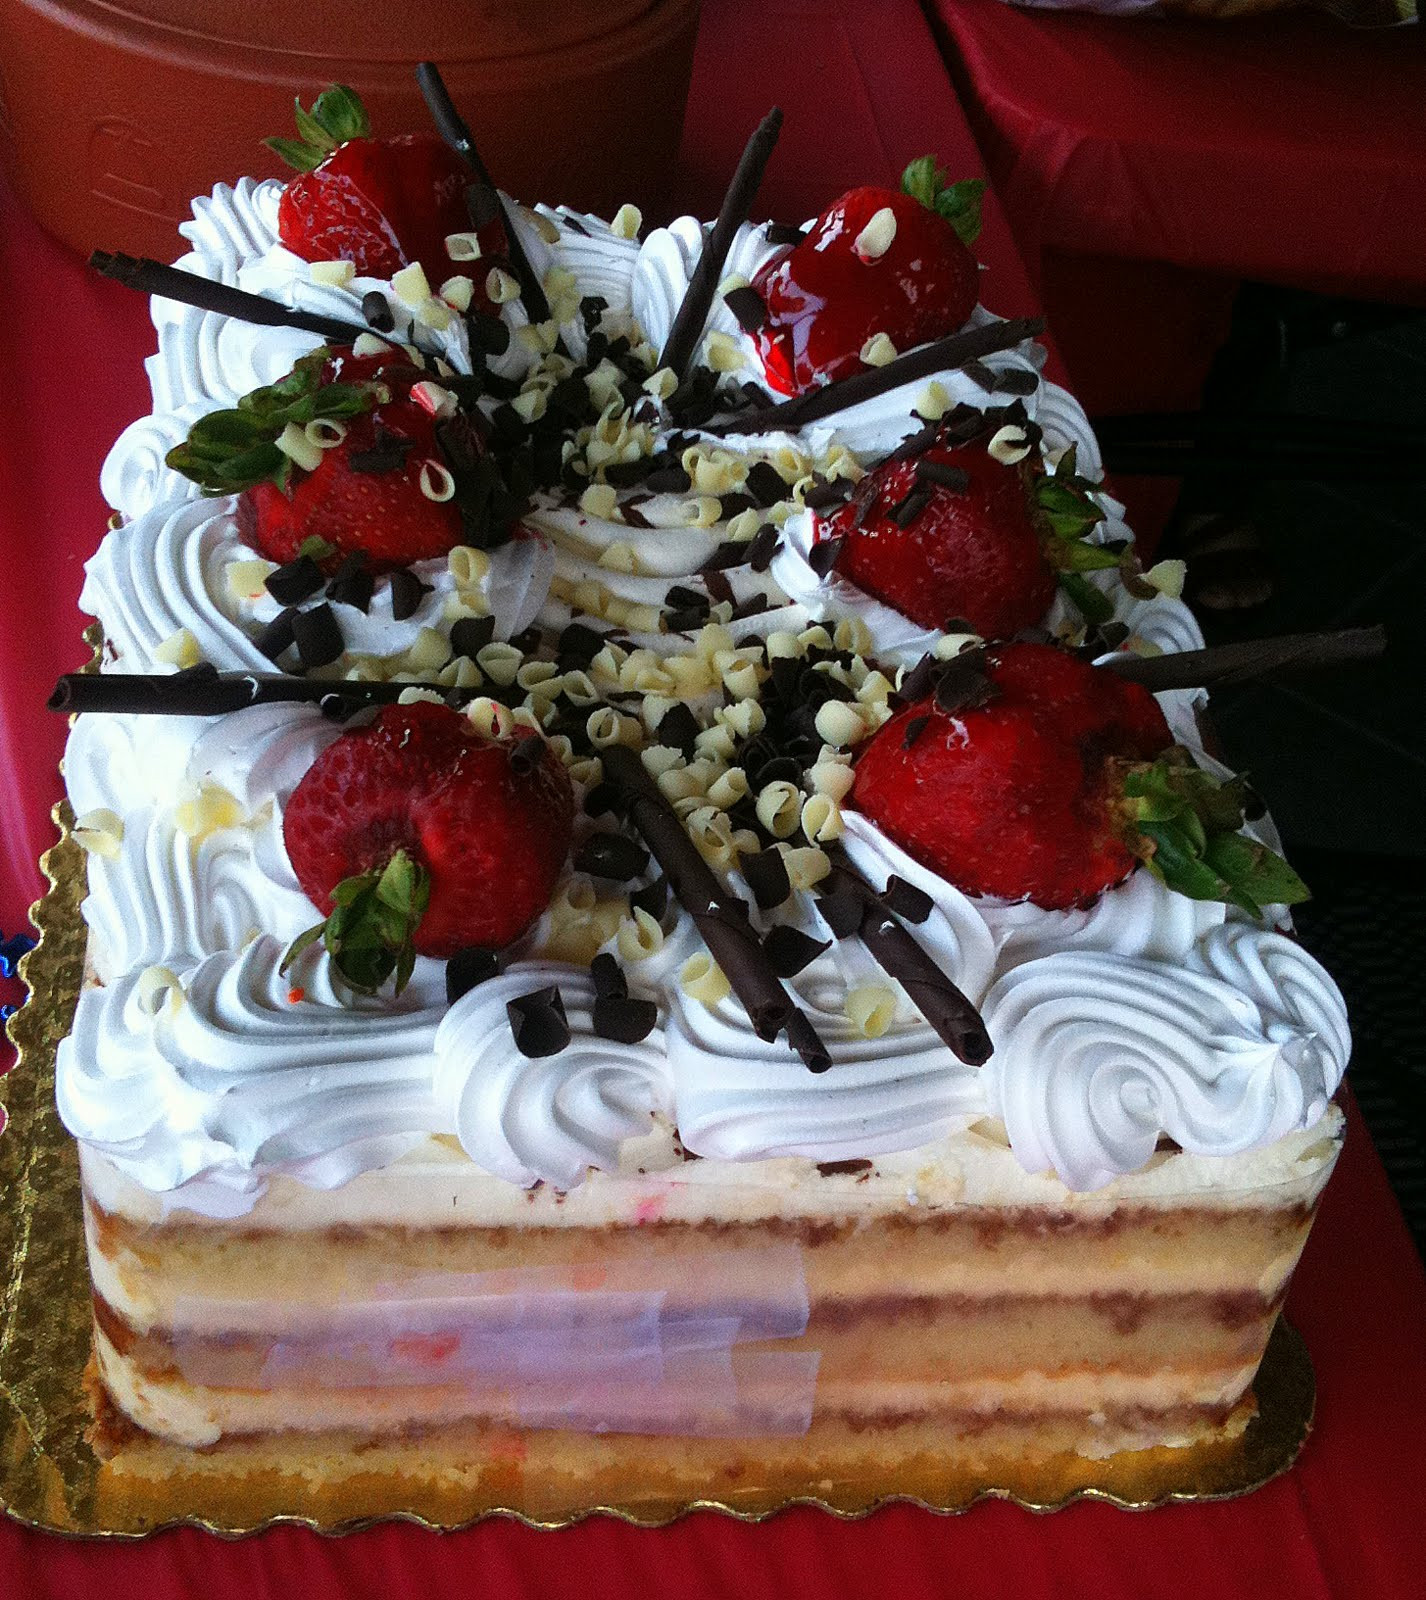 Albertsons Birthday Cake Designs
 Albertsons Birthday Cakes